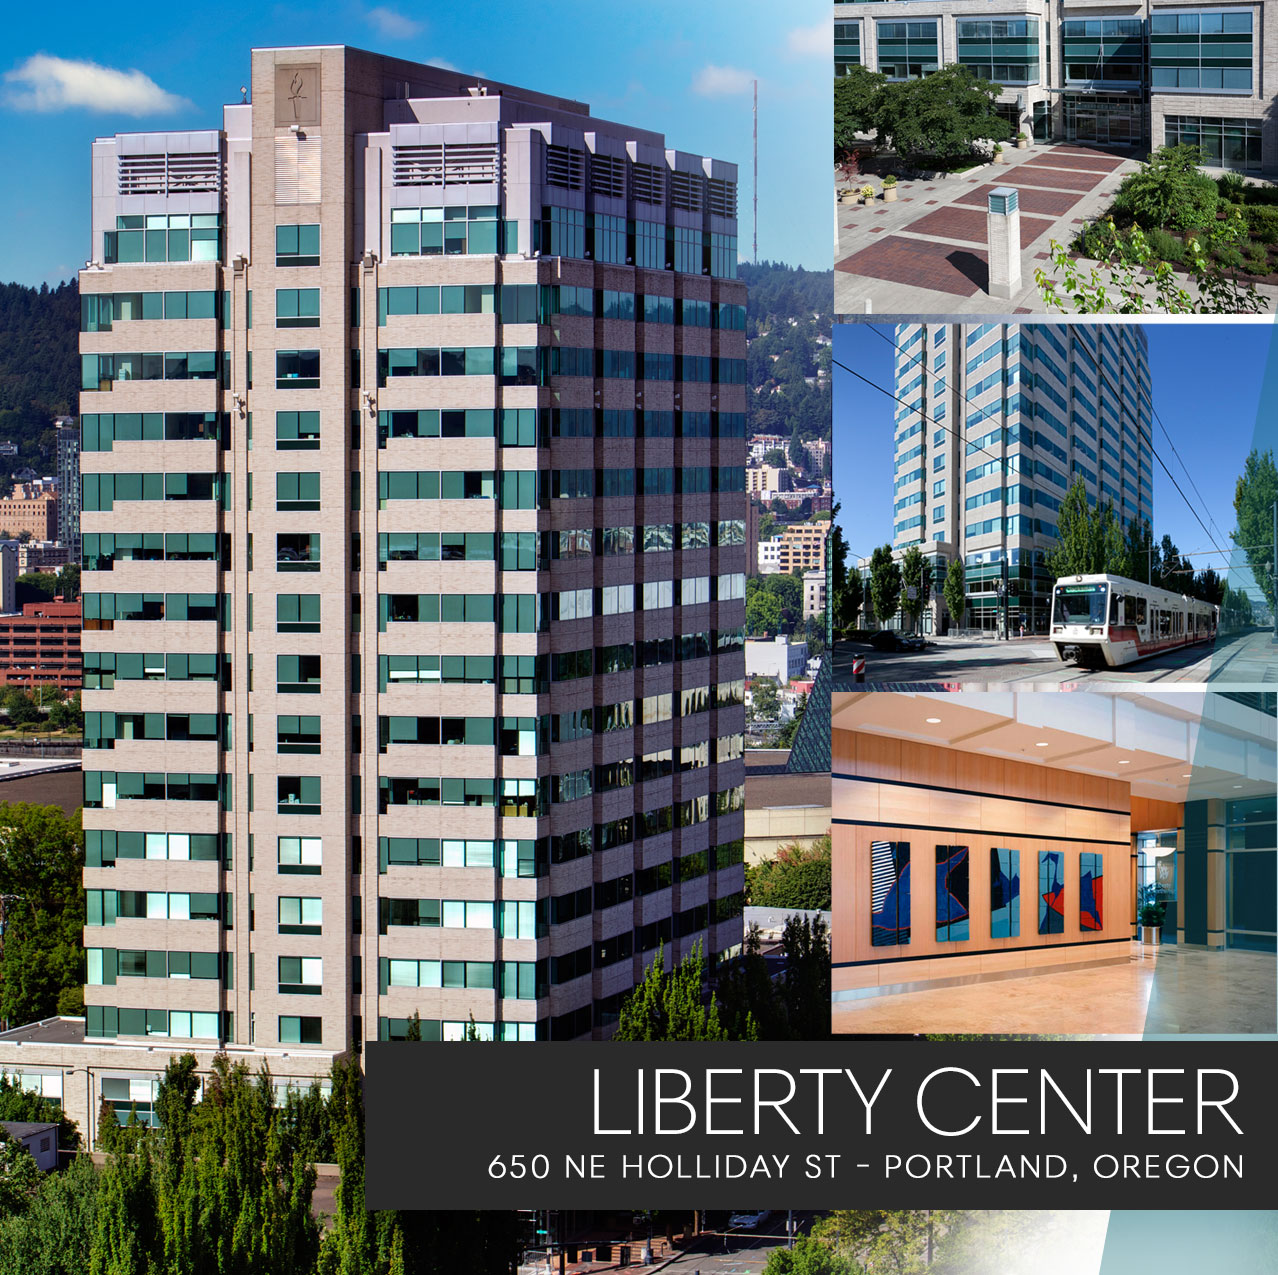 Liberty Center